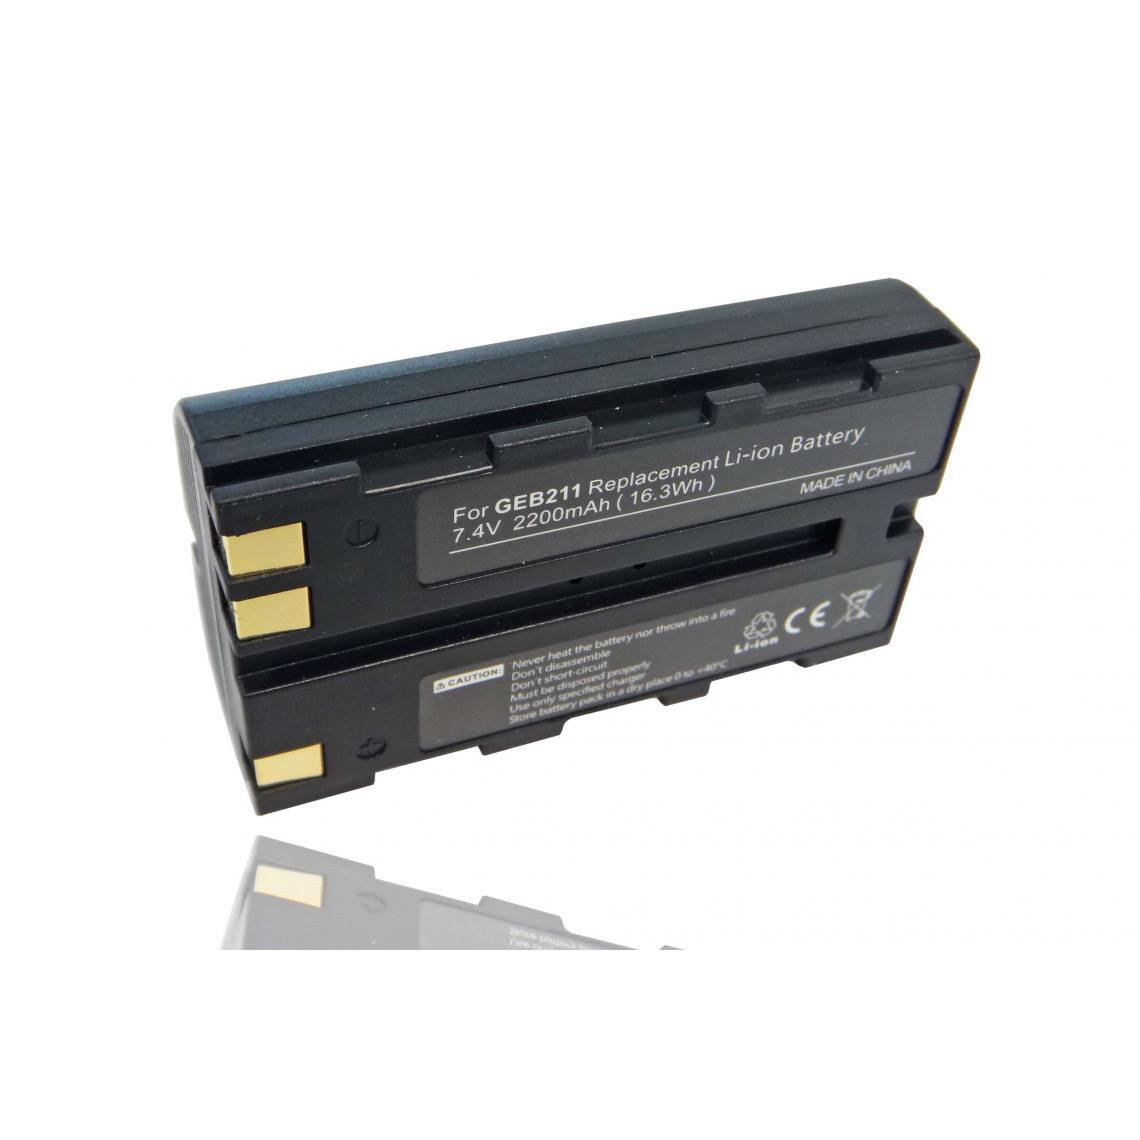 Vhbw - vhbw Batterie compatible avec Leica Piper 200 Laser dispositif de mesure laser, outil de mesure (2200mAh, 7,4V, Li-ion) - Piles rechargeables